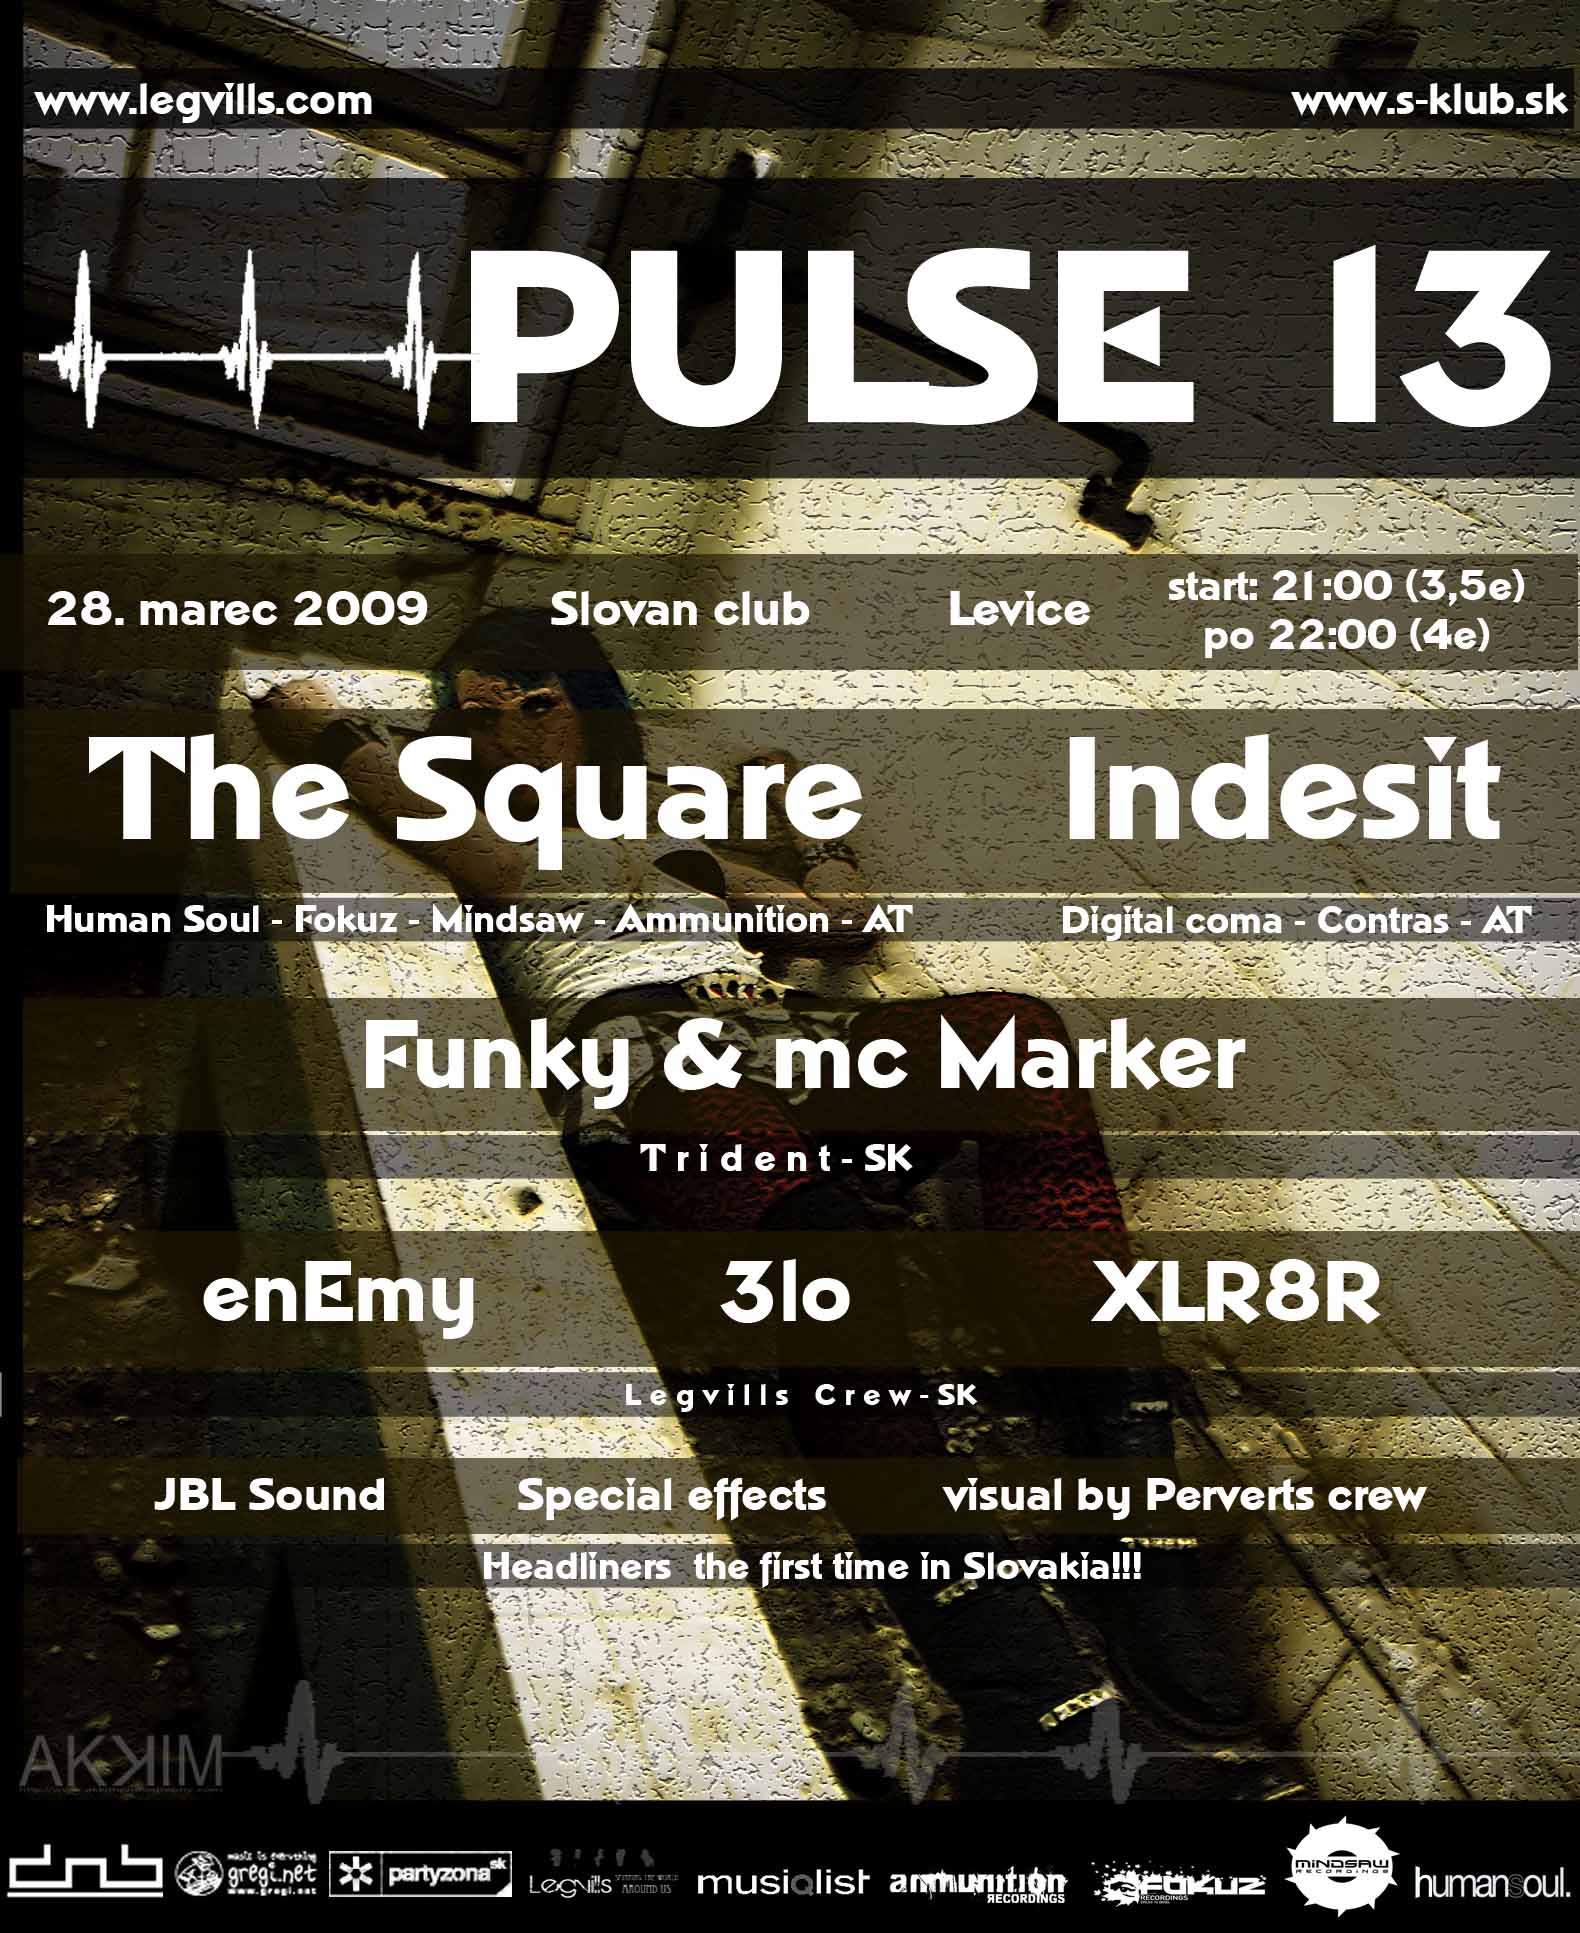 Pulse 13